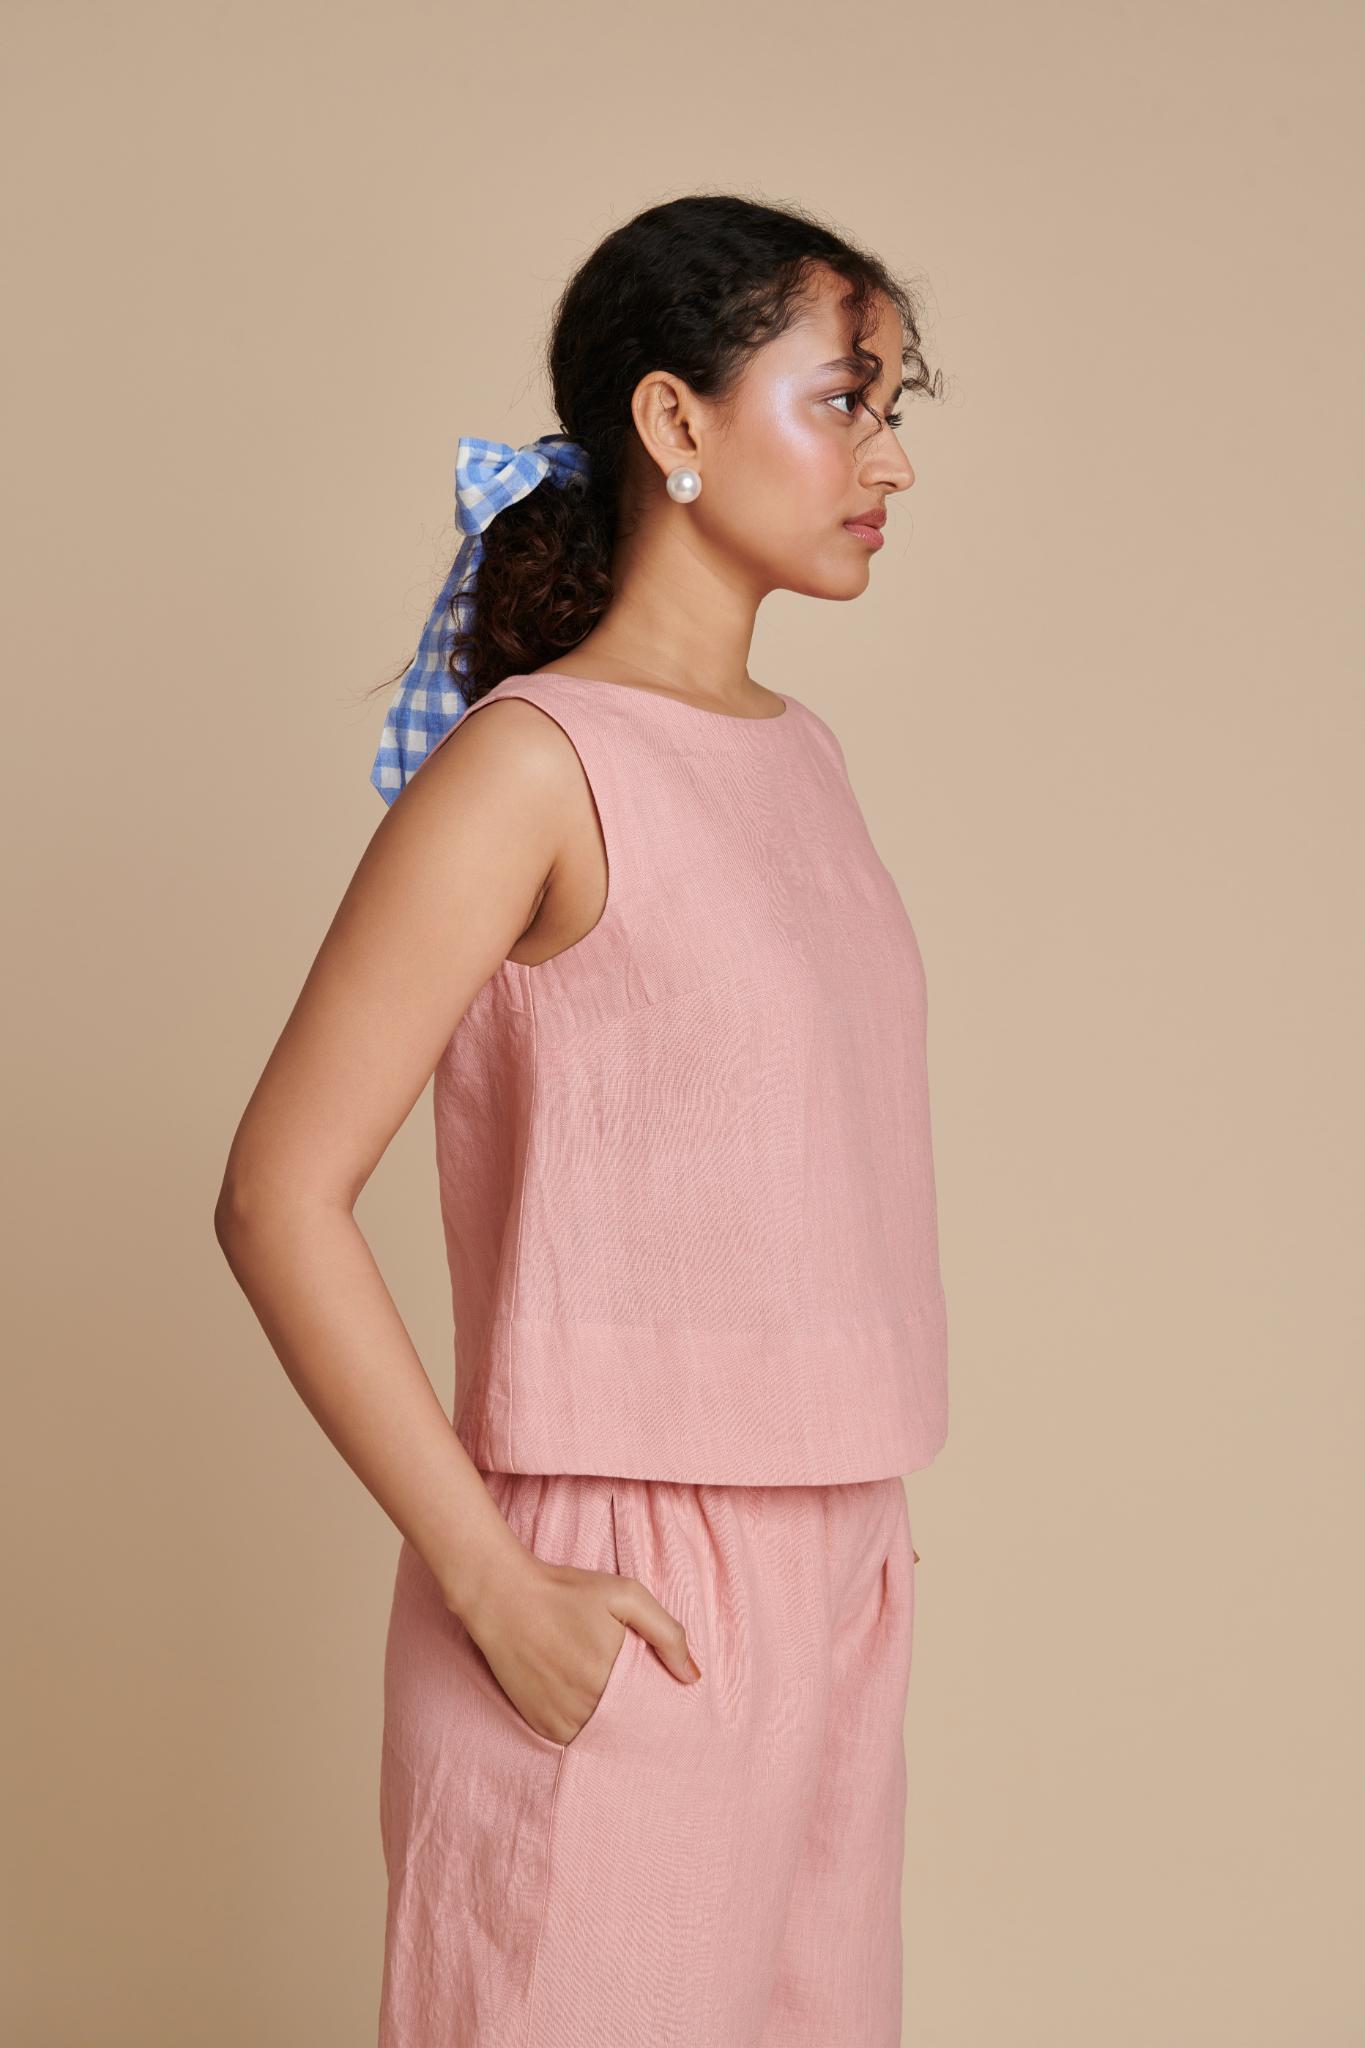 Candy Floss Linen Sleeveless Top & Pyjama Set - CiceroniCo-ord SetSaphed